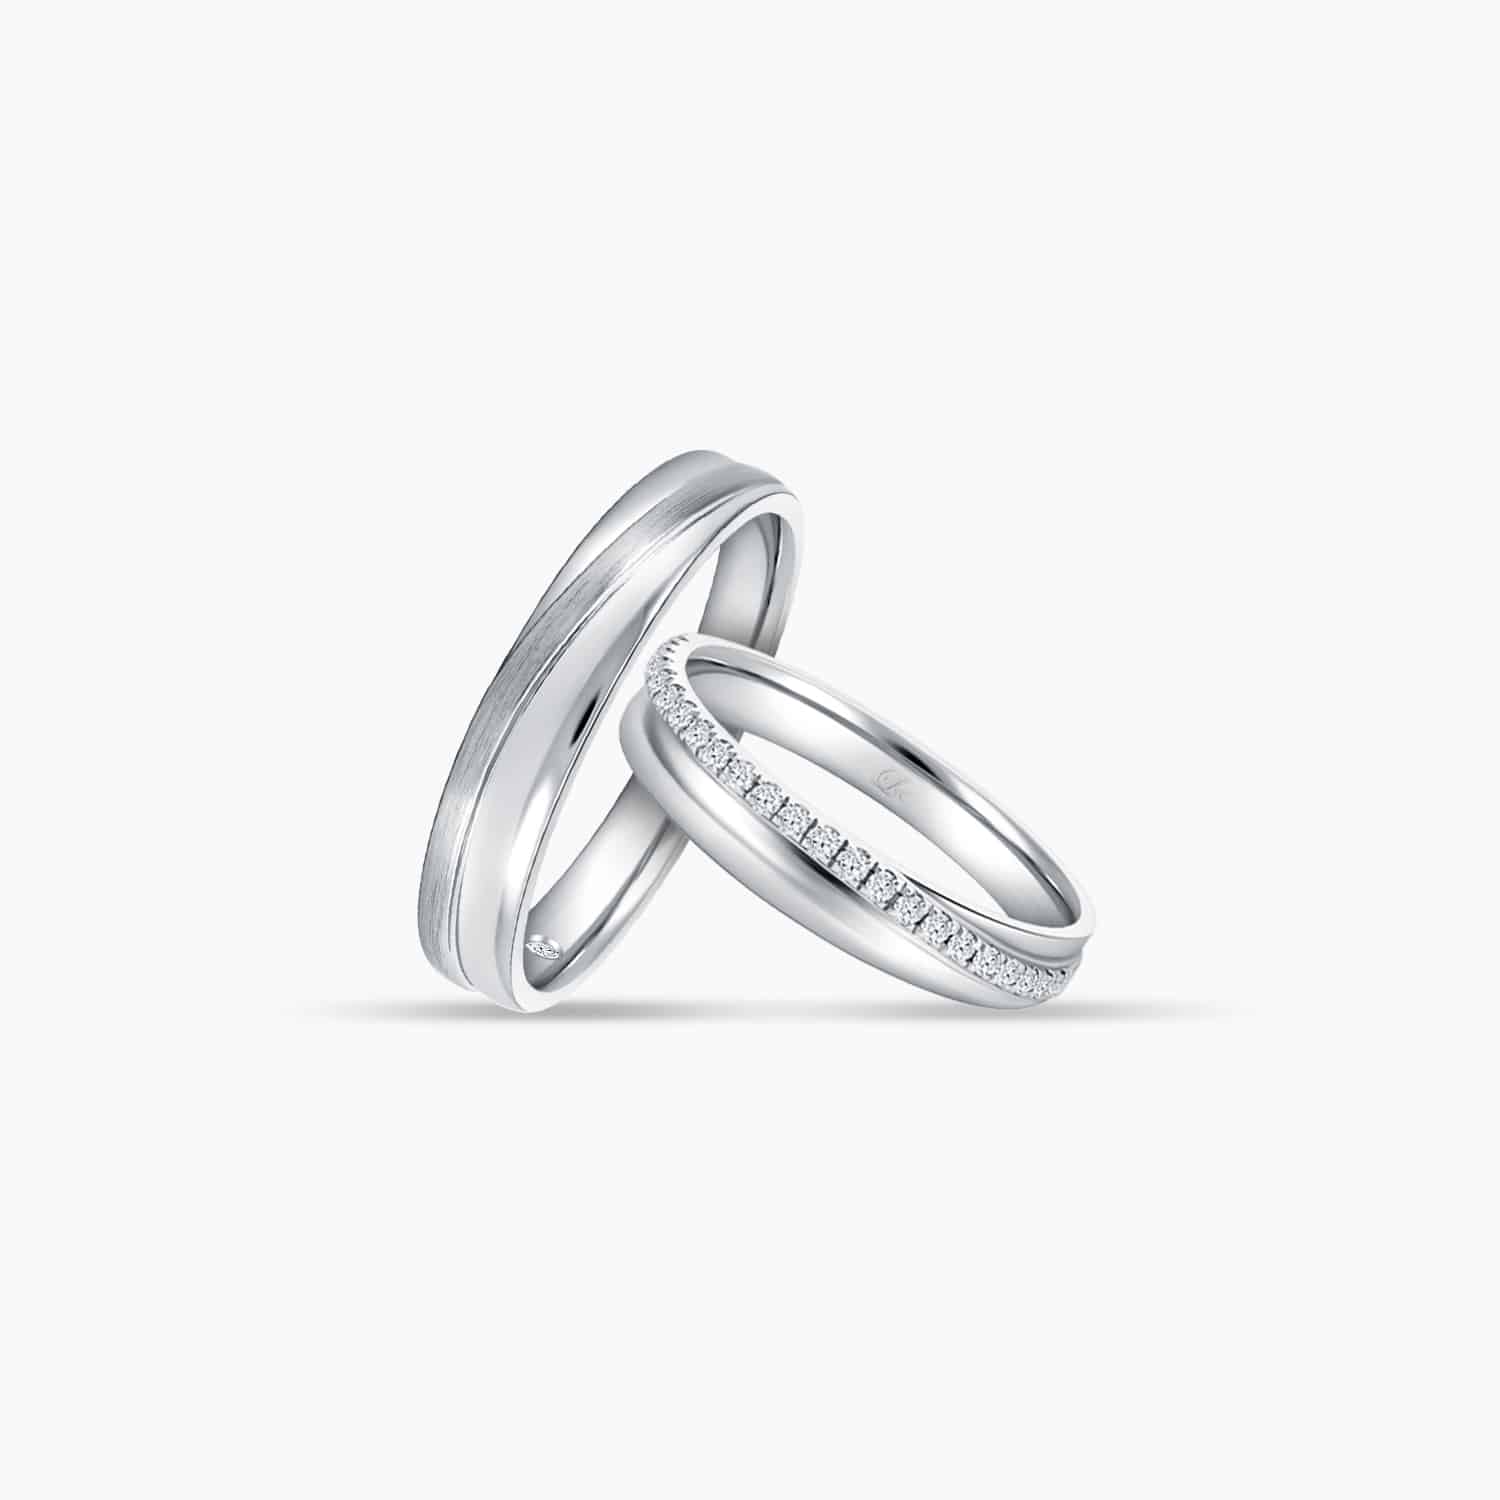 LVC PURETE ETERNITY WEDDING BAND IN PLATINUM WITH DIAMONDS a set of wedding bands in platinum with diamonds 钻石 戒指 cincin diamond